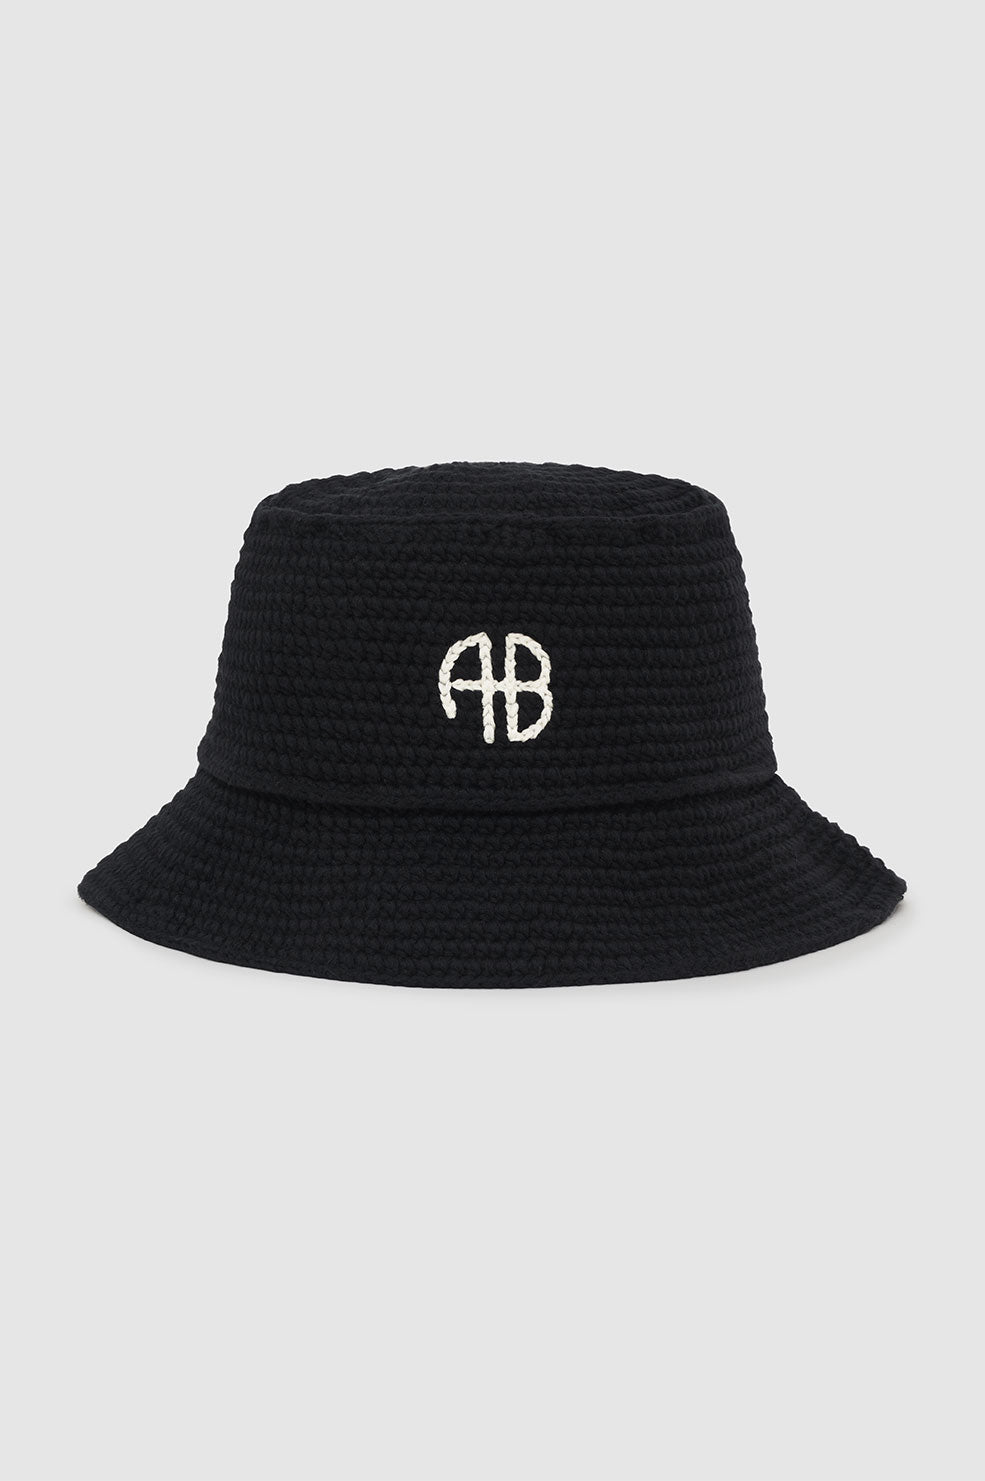 ANINE BING Darra Bucket Hat - Black - Front View